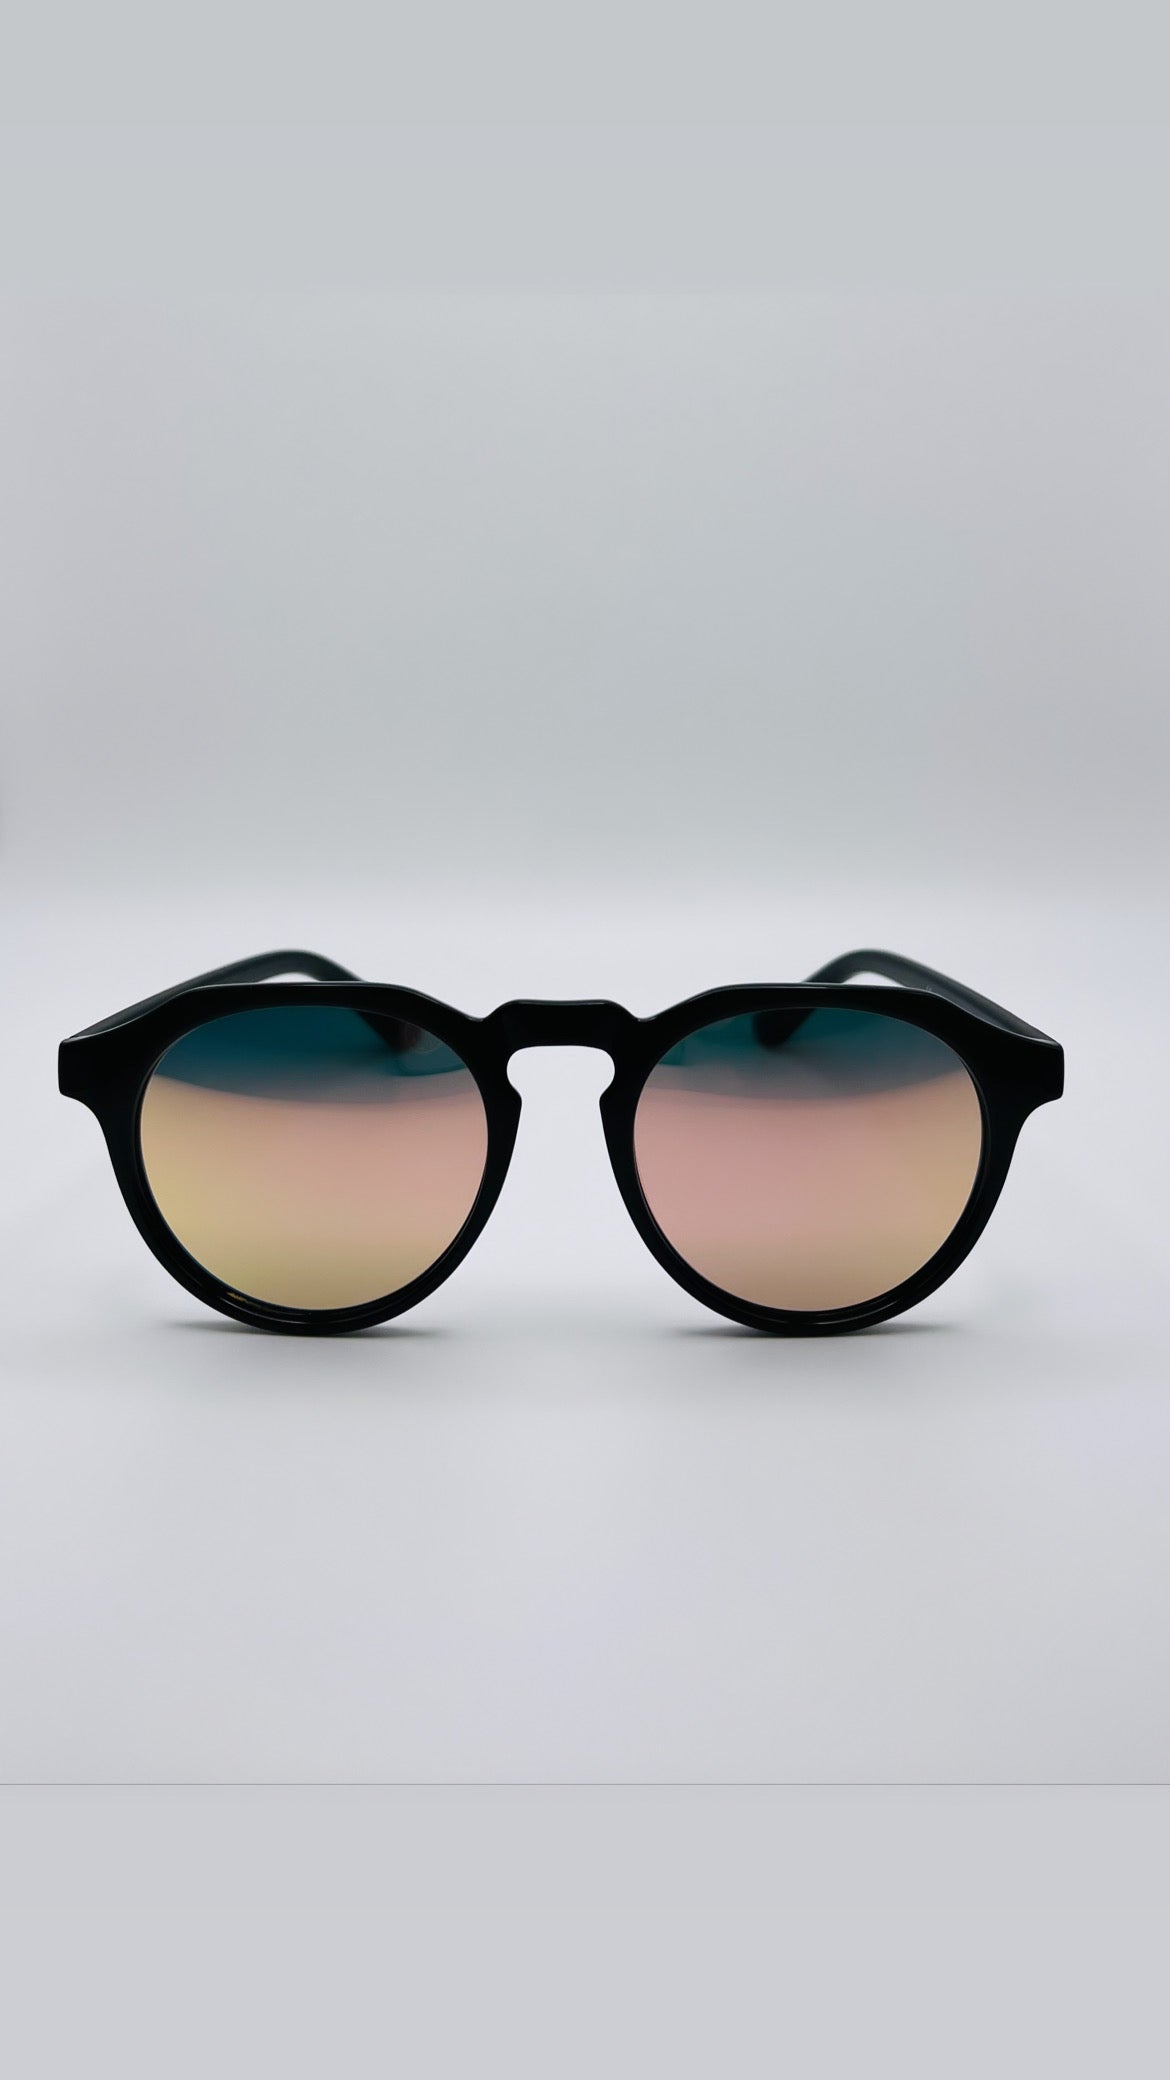 "ICU 2" Sunglasses